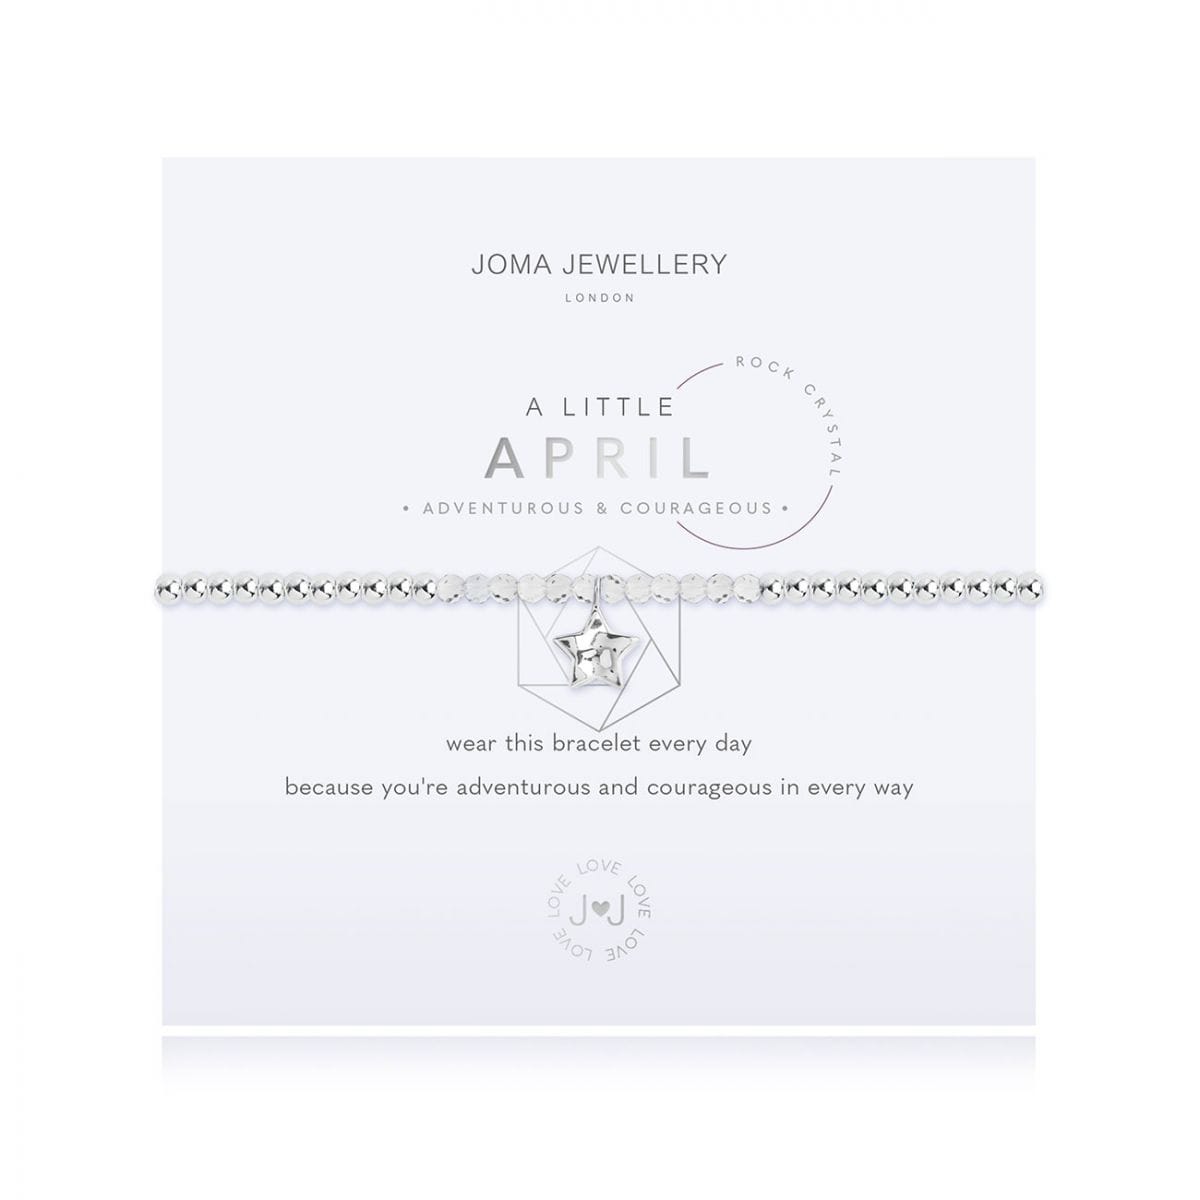 Joma Jewellery Bracelet Joma Jewellery Bracelet - A Little Birthstone - April - Rock Crystal